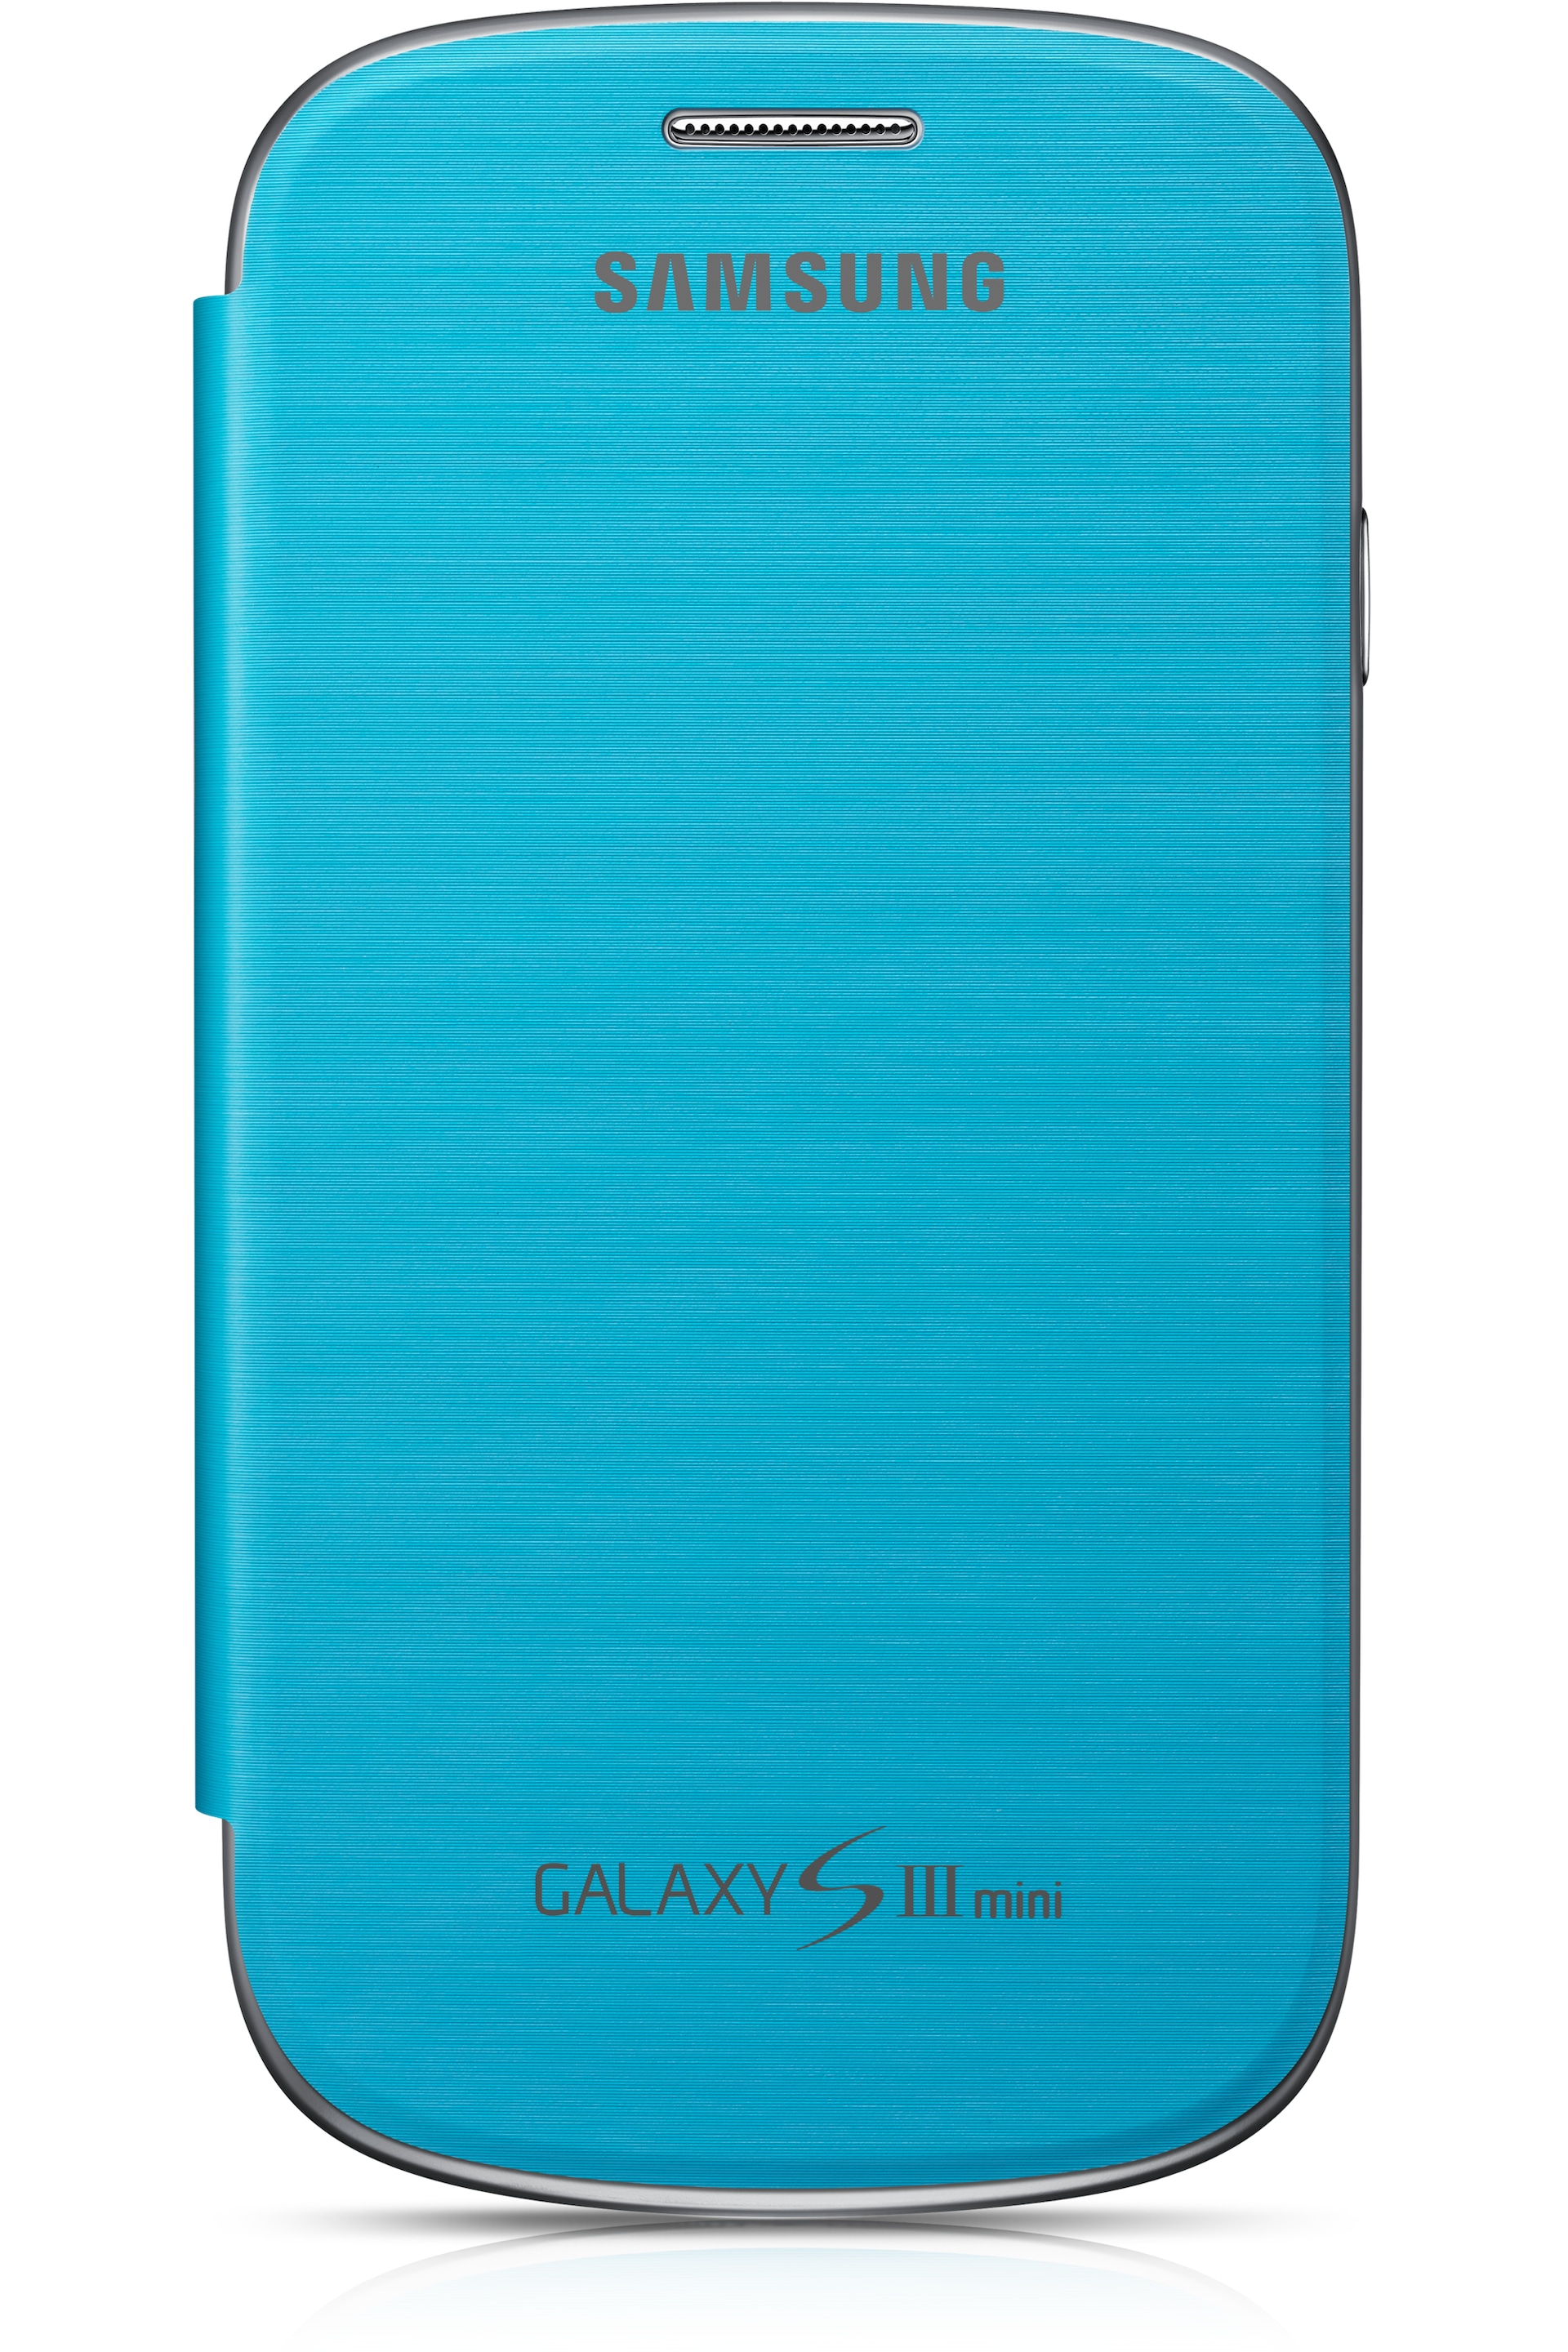 blad Gewaad Licht Galaxy S3 mini Flip Cover | Samsung Support IE